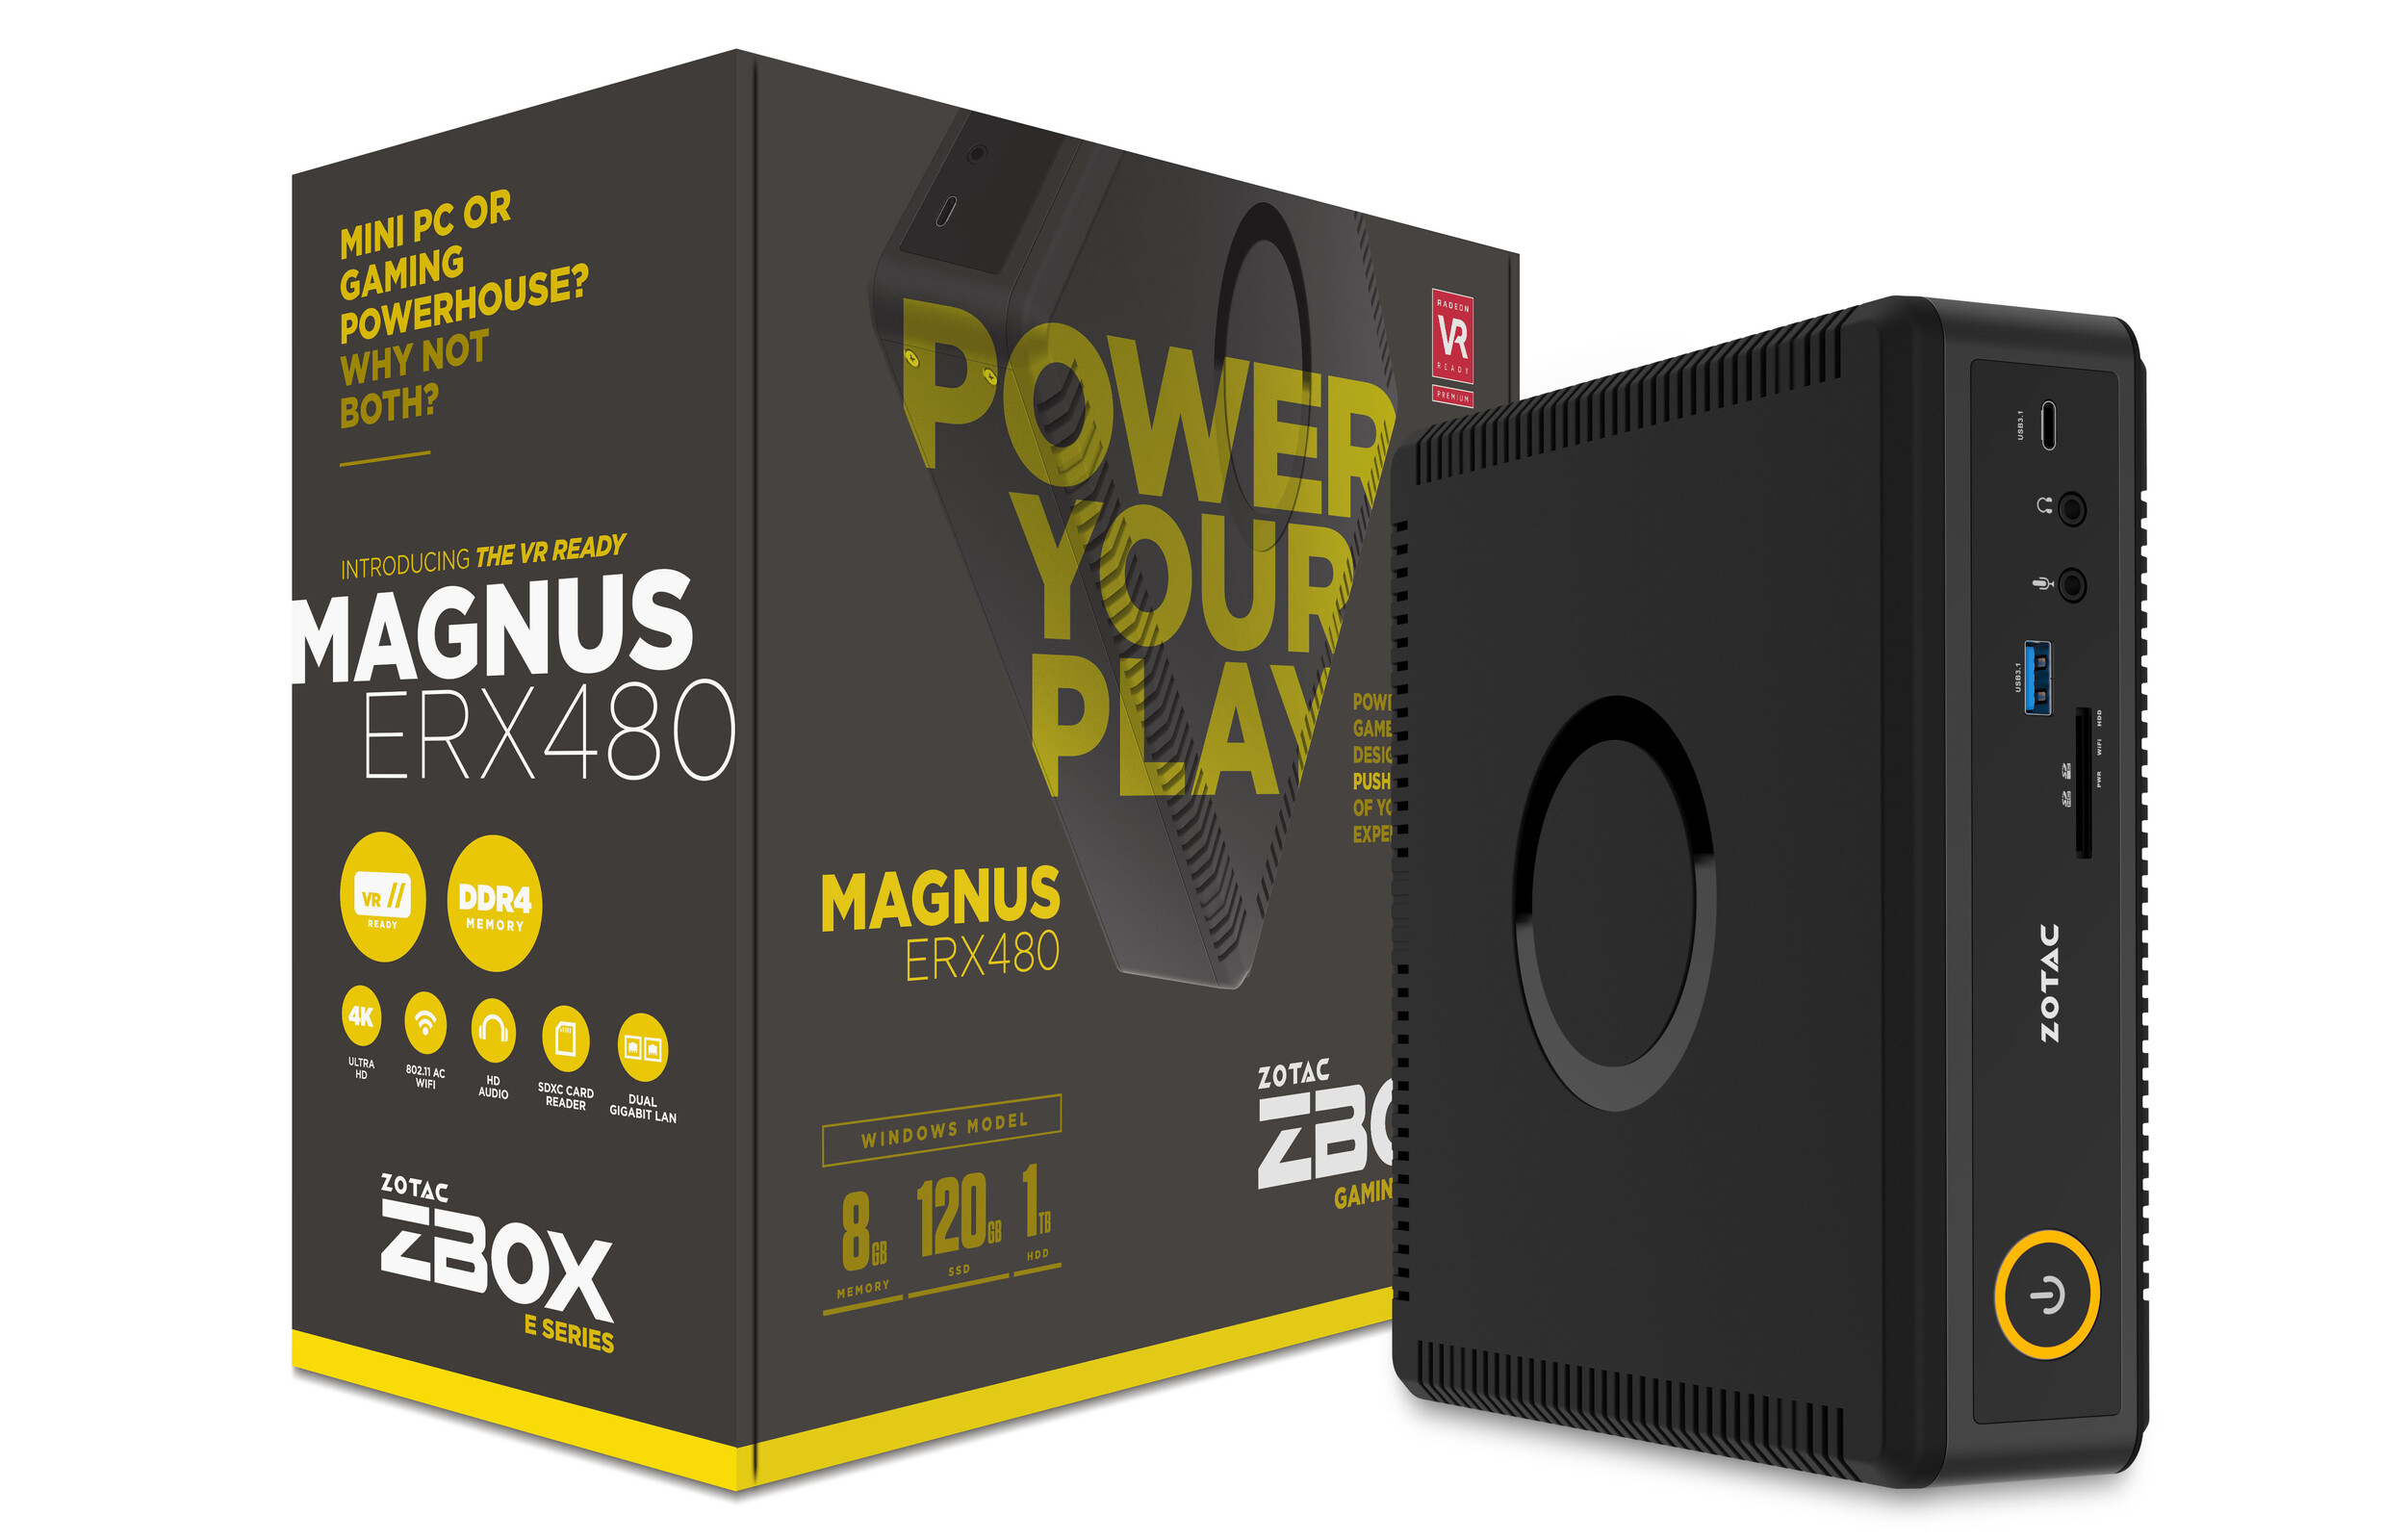 Zotac announces Magnus ERX480 mini PC with AMD RX graphics - NotebookCheck.net News